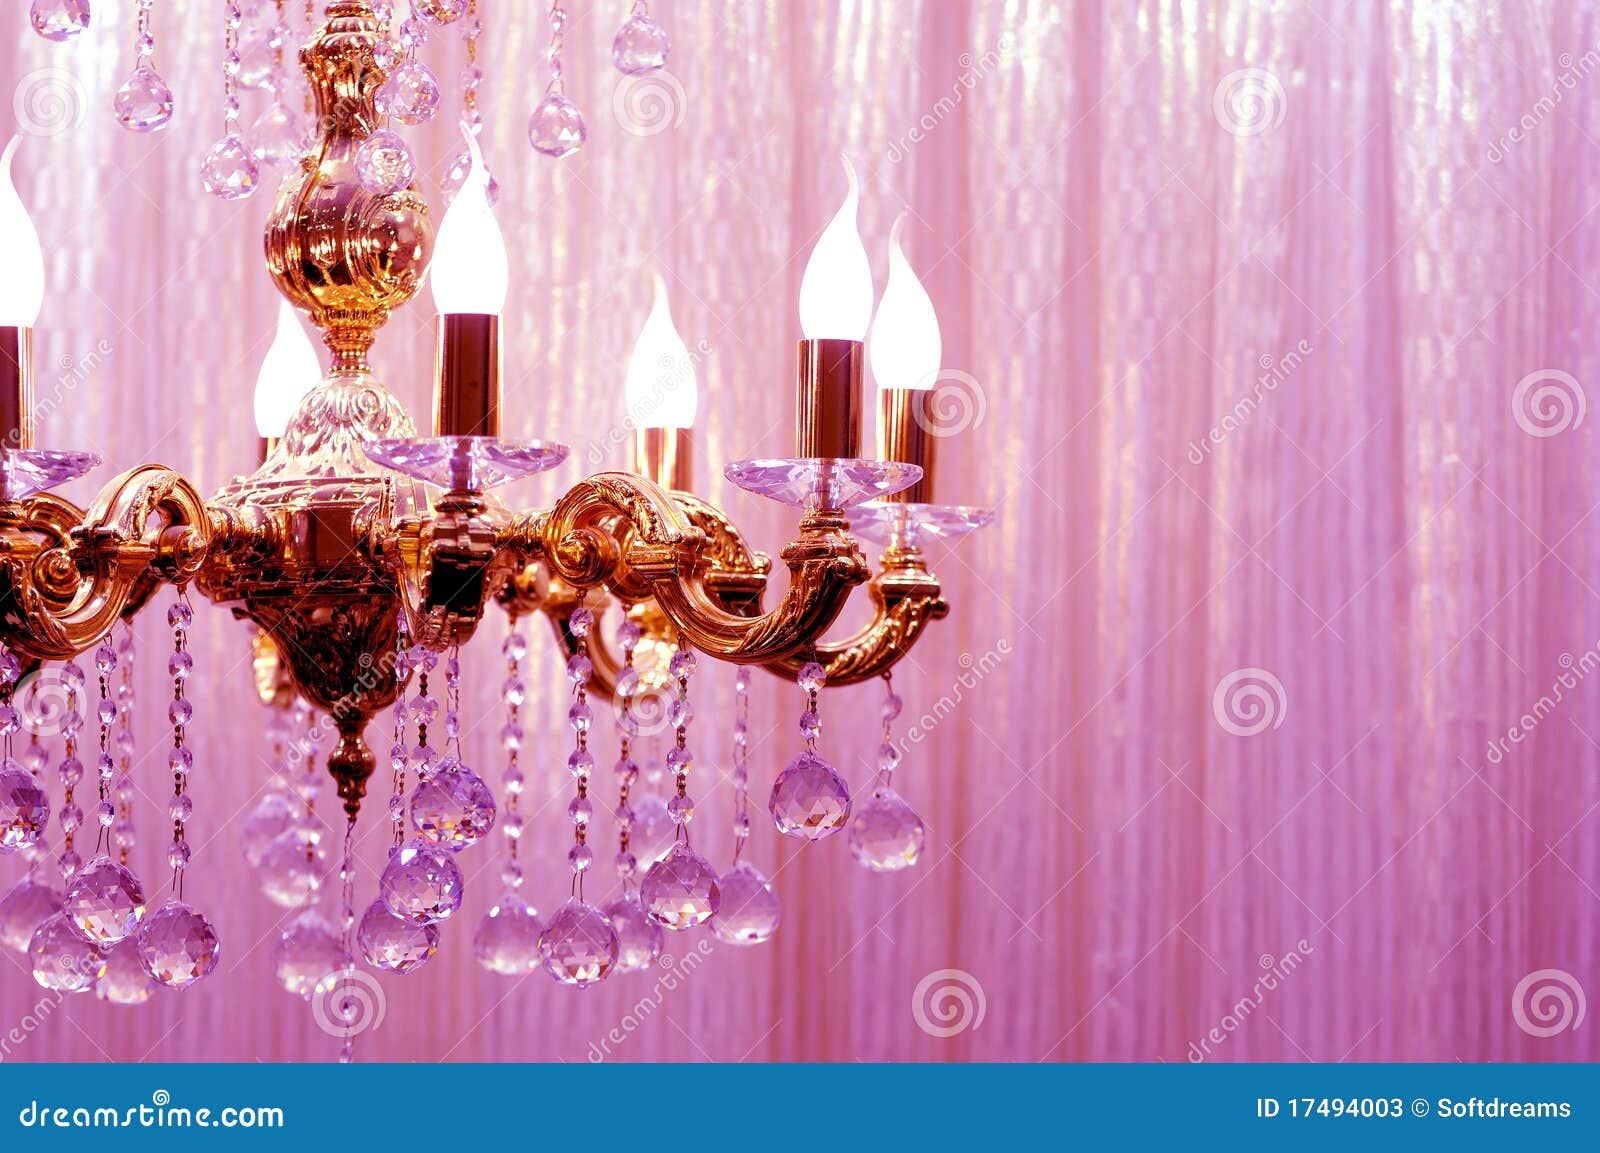 crystal chandelier